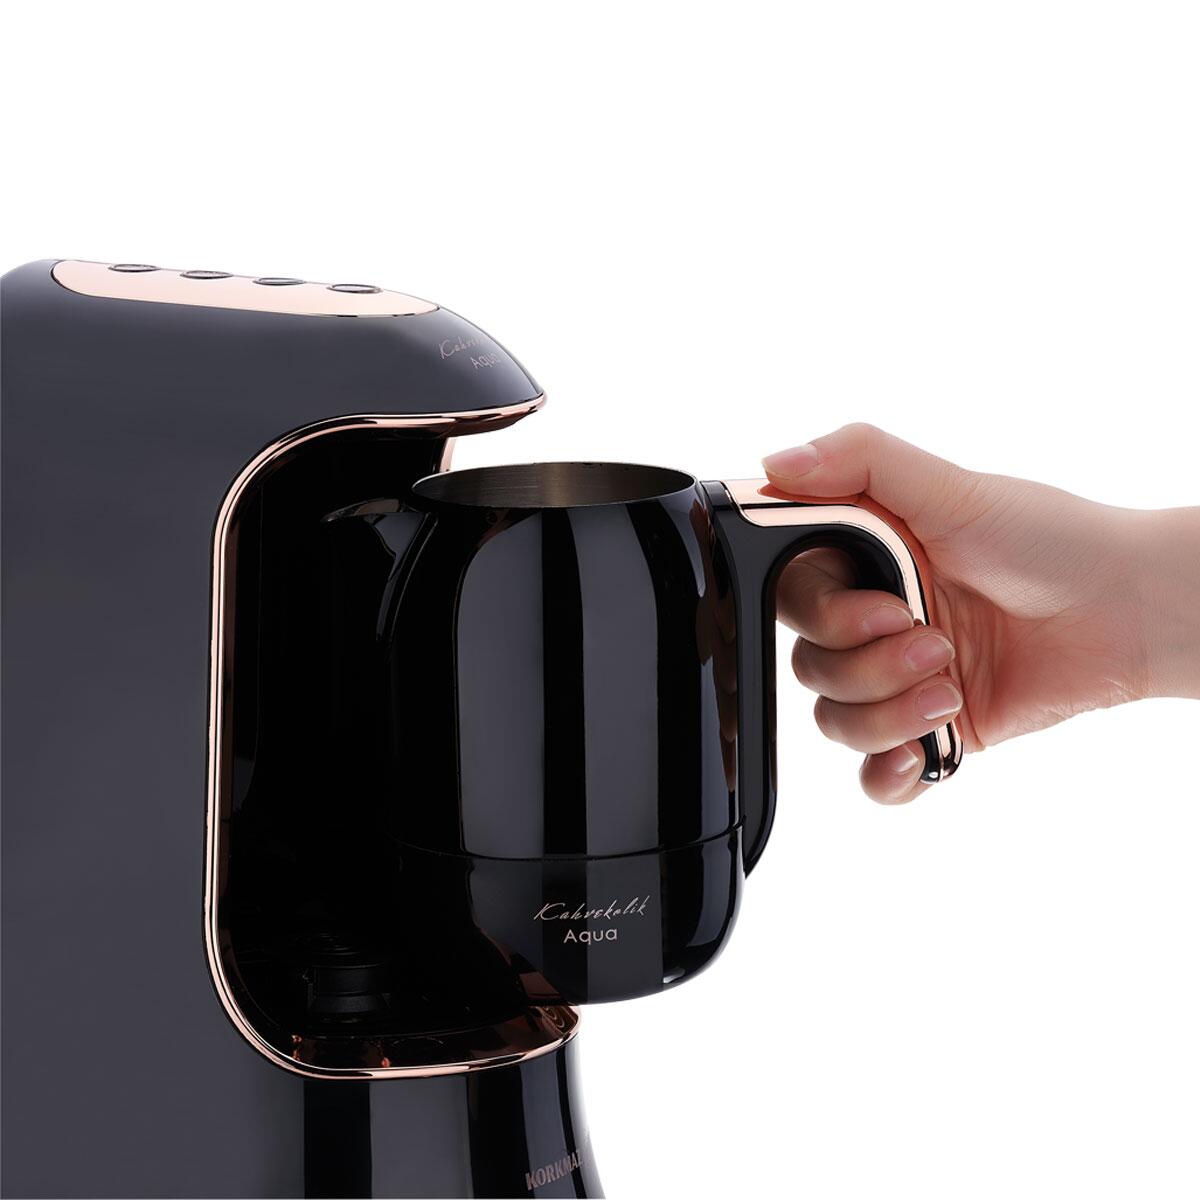 Korkmaz Kahvekolik Deluxe Aqua Siyah/Rosagold Kahve Makinası - 3